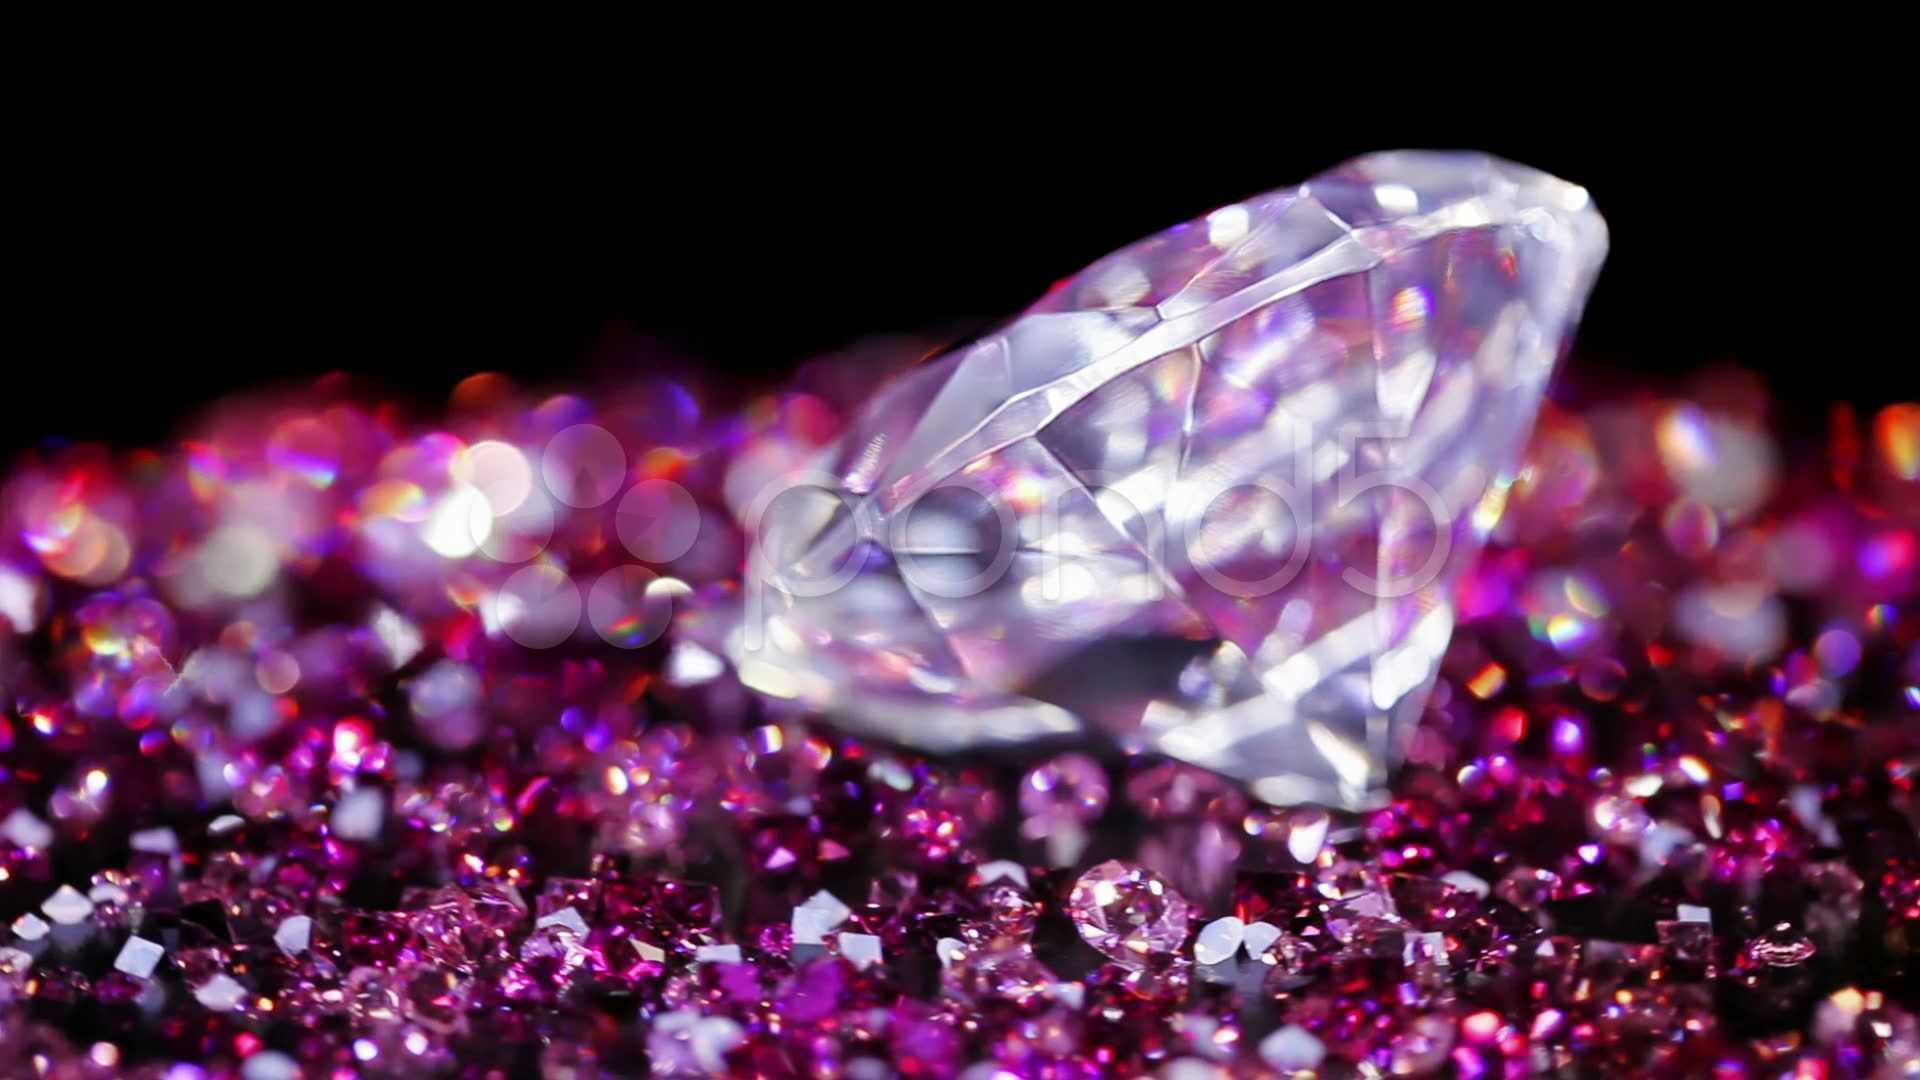 purple gems